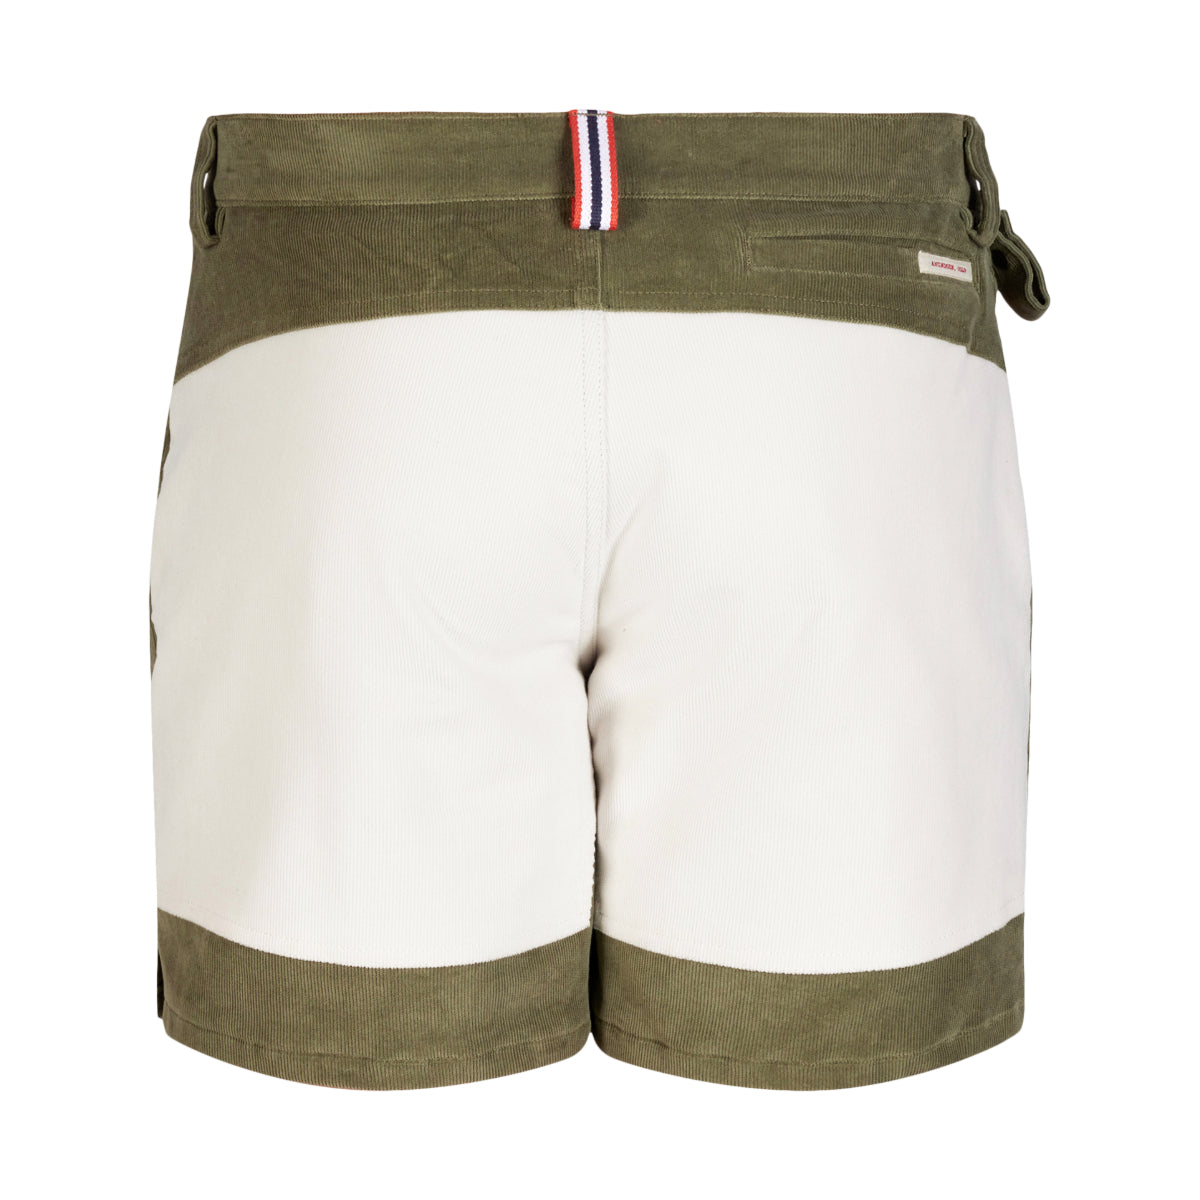 Amundsen Sports - Men's 7 Incher Concord Shorts - Olive Ash / Natural